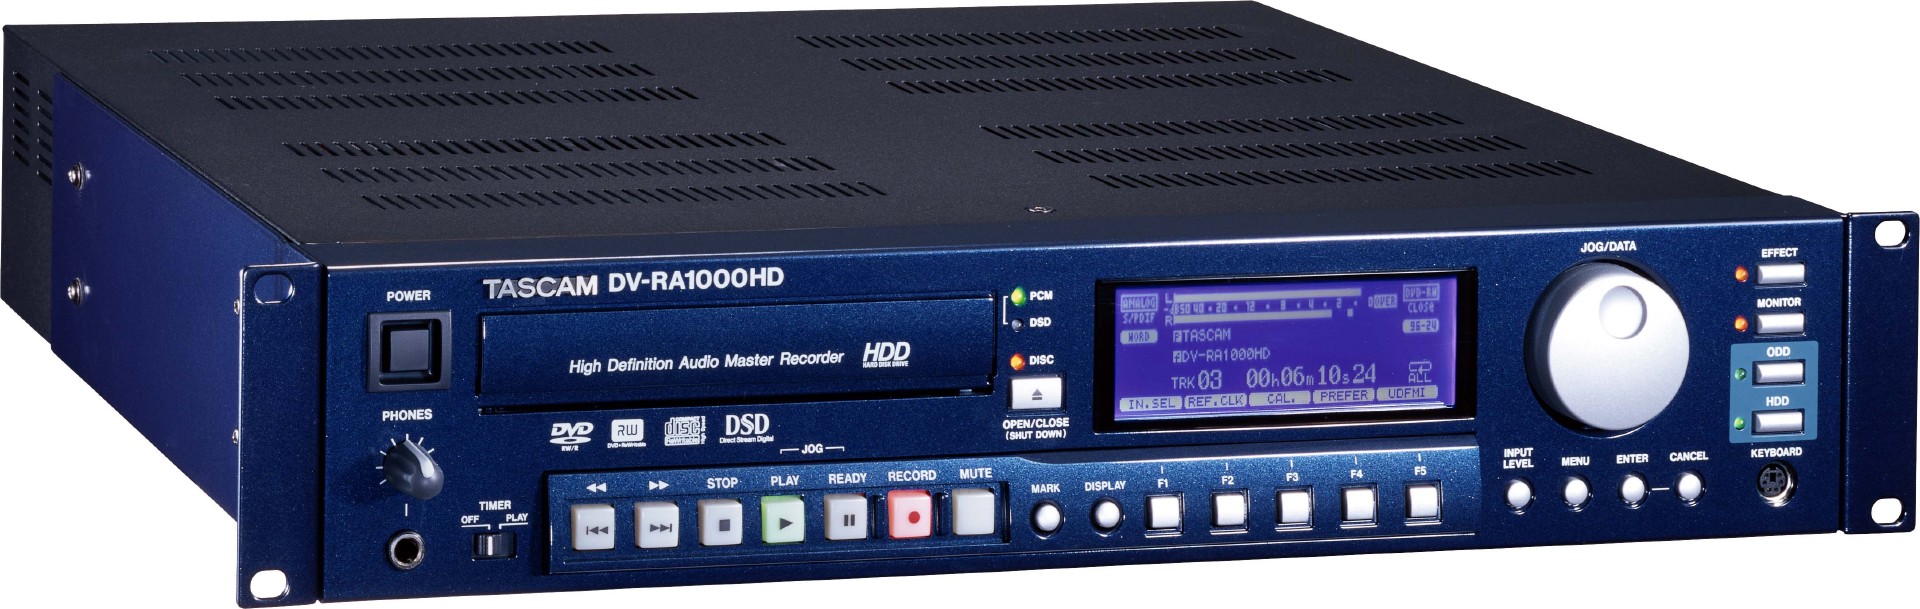 DV-RA1000HD | オーディオマスターレコーダー | TASCAM (日本)